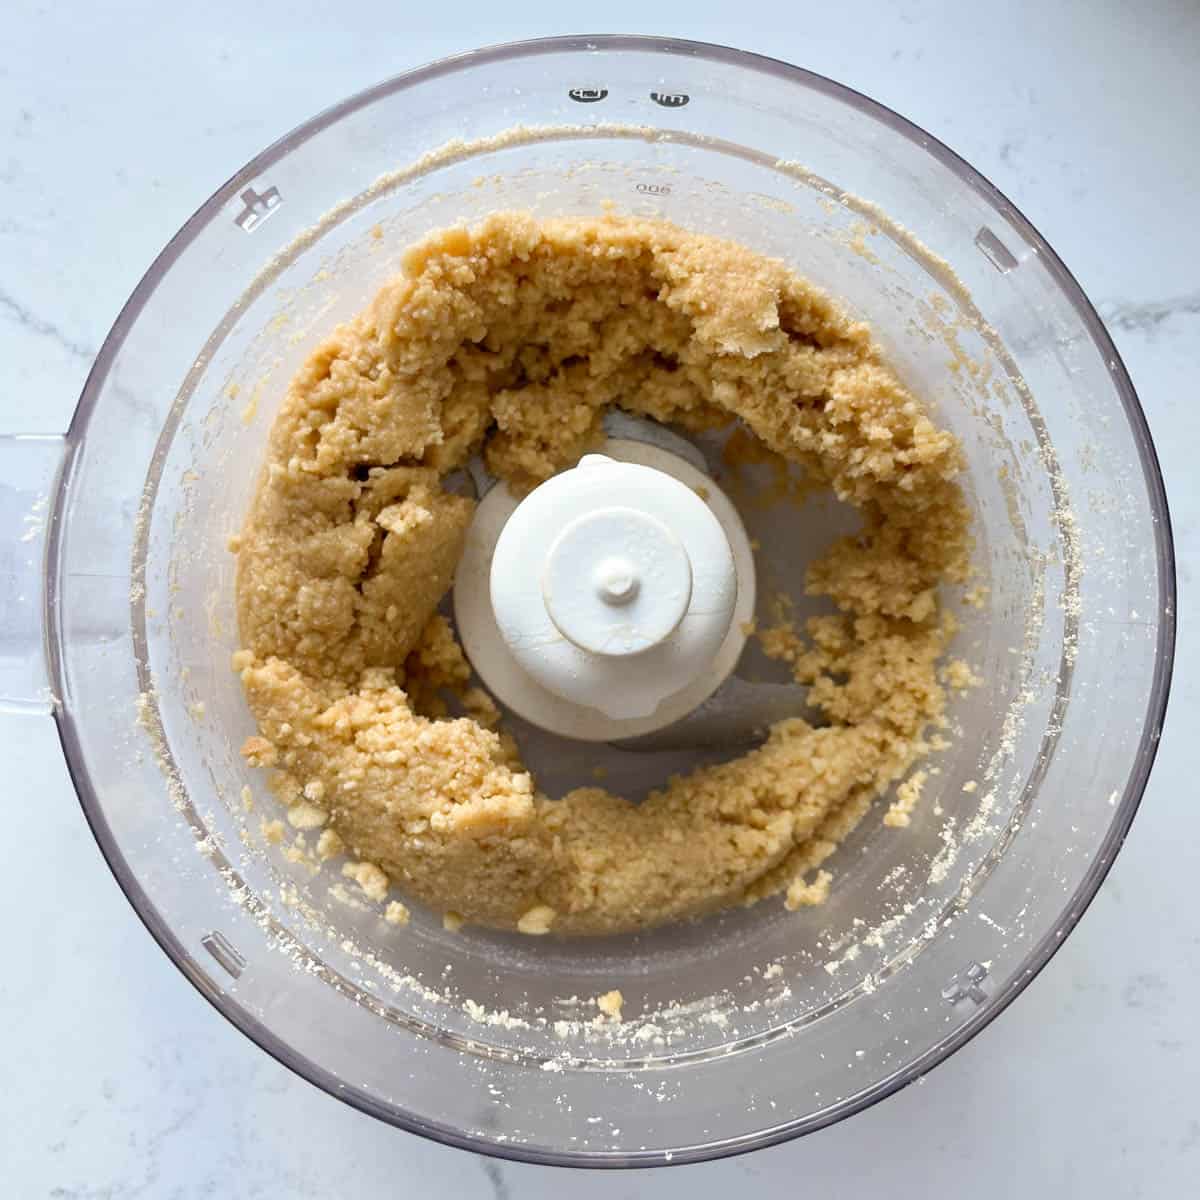 Milkybar cheesecake process - biscuit base mixture in blender.